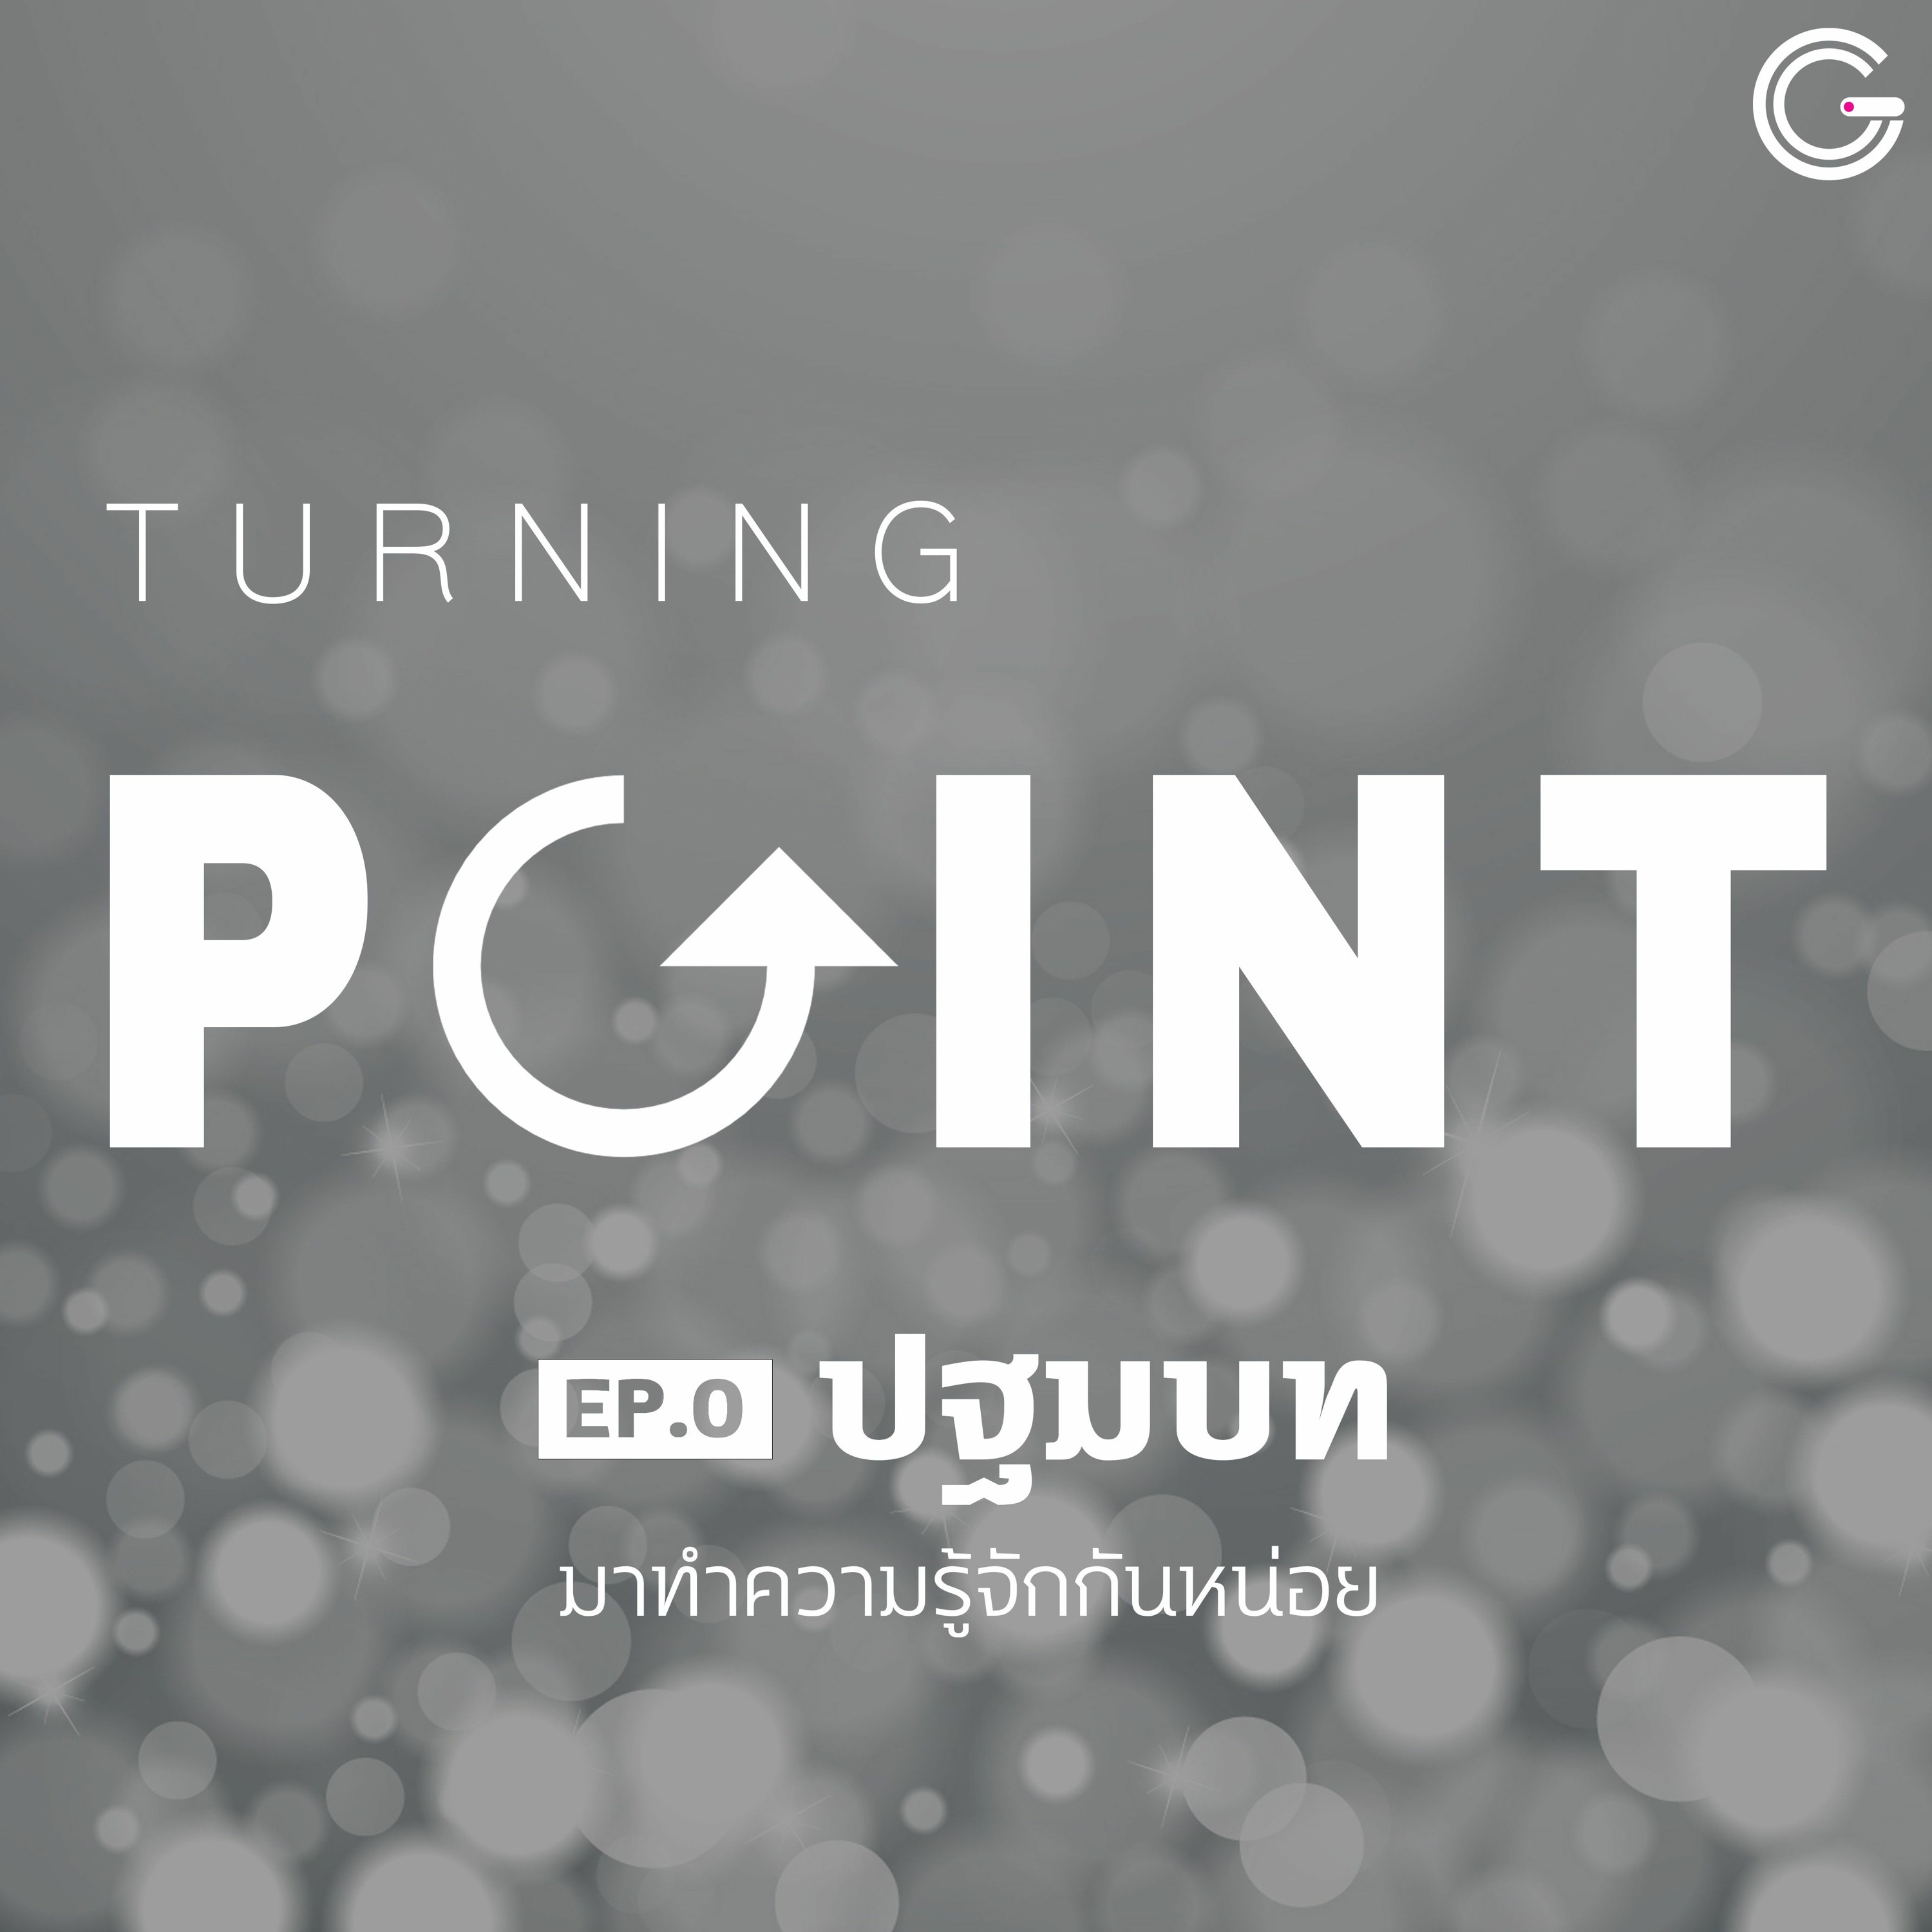 Turning Point : EP.0 ปฐมบท มาทำความรู้จักกันหน่อย